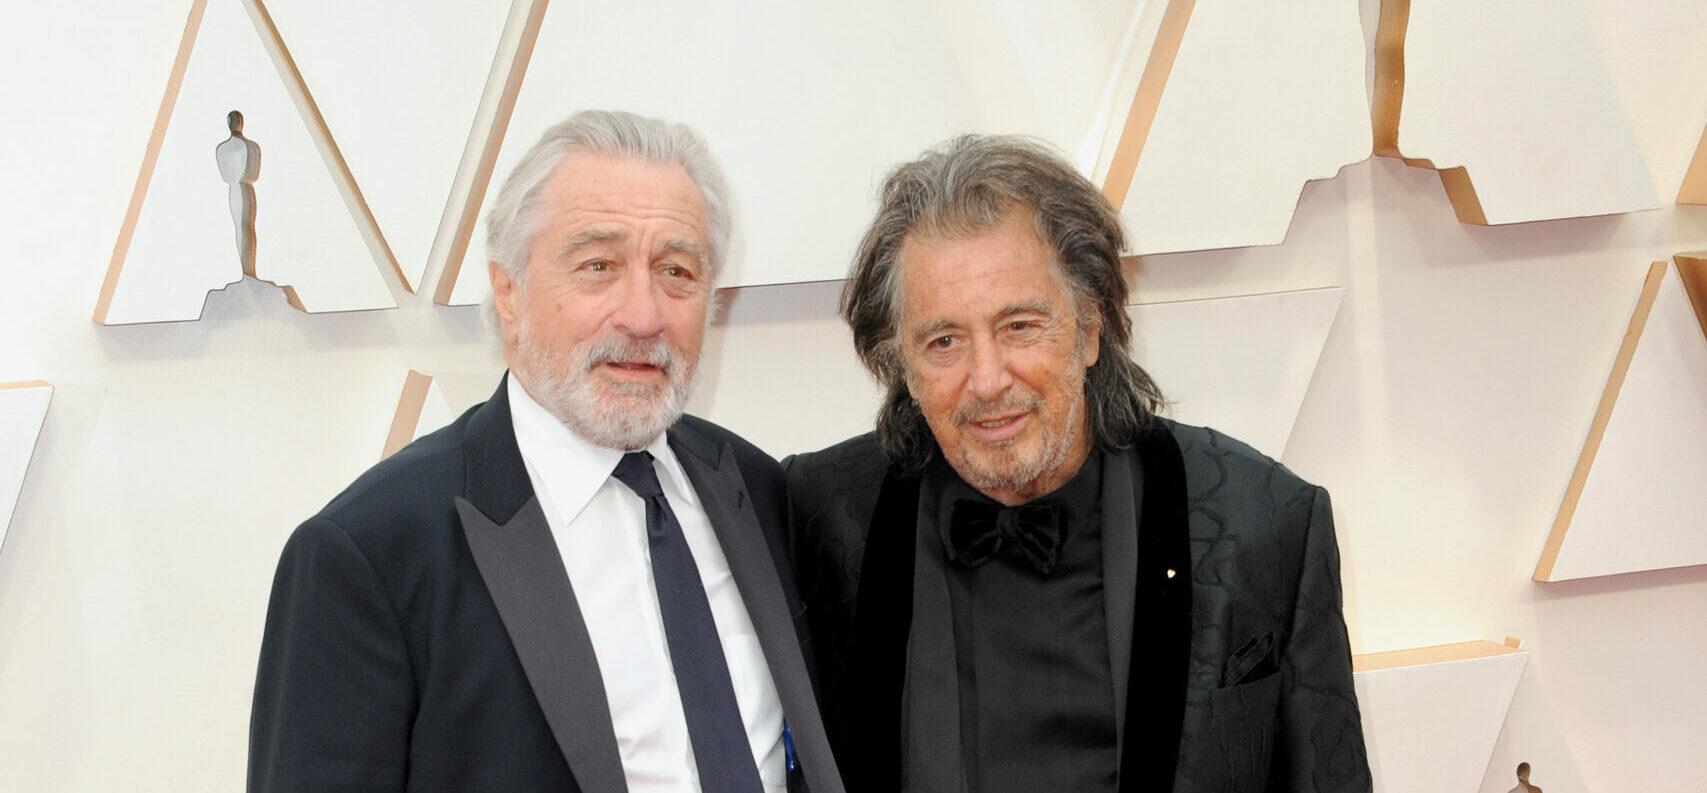 Robert De Niro and Al Pacino at the 92nd Academy Awards